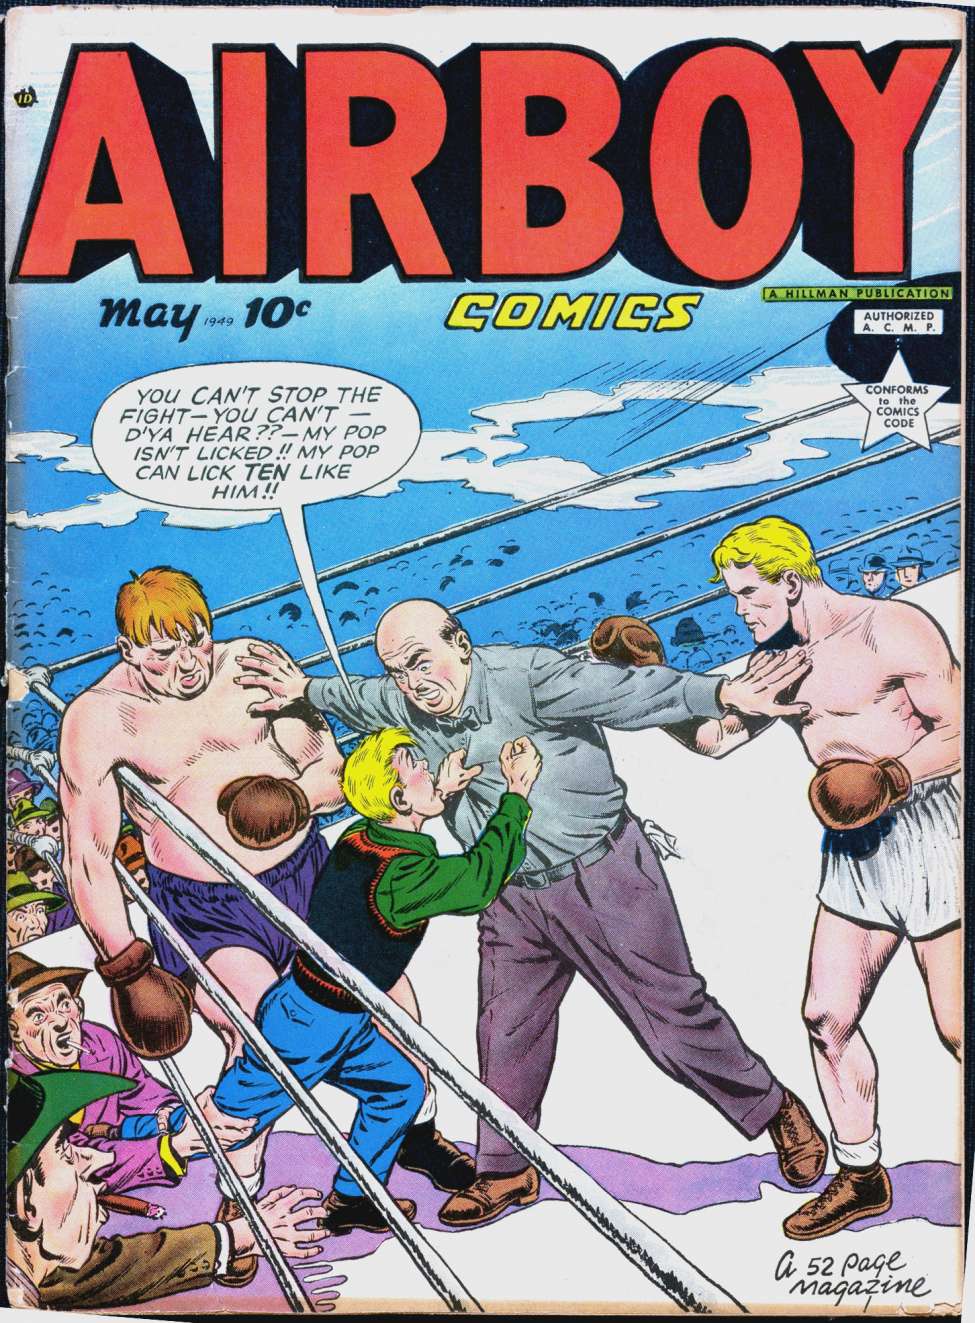 Comic Book Cover For Airboy Comics v6 4 (alt) - Version 2